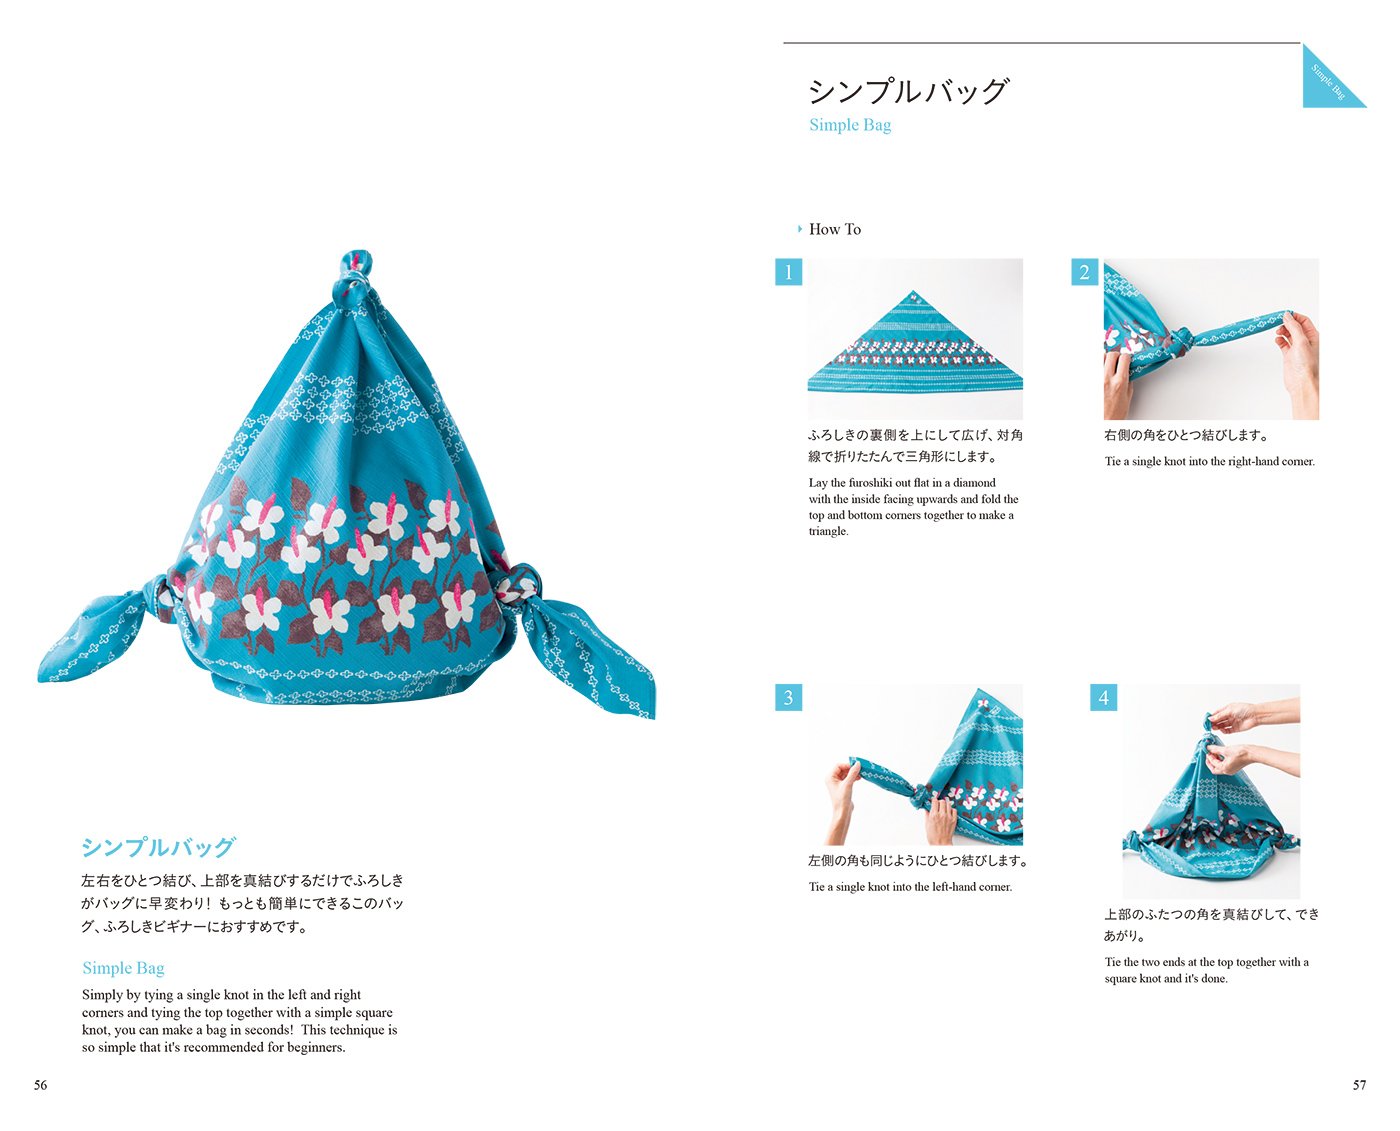 The Furoshiki Handbook (Japanese-English Bilingual Books)